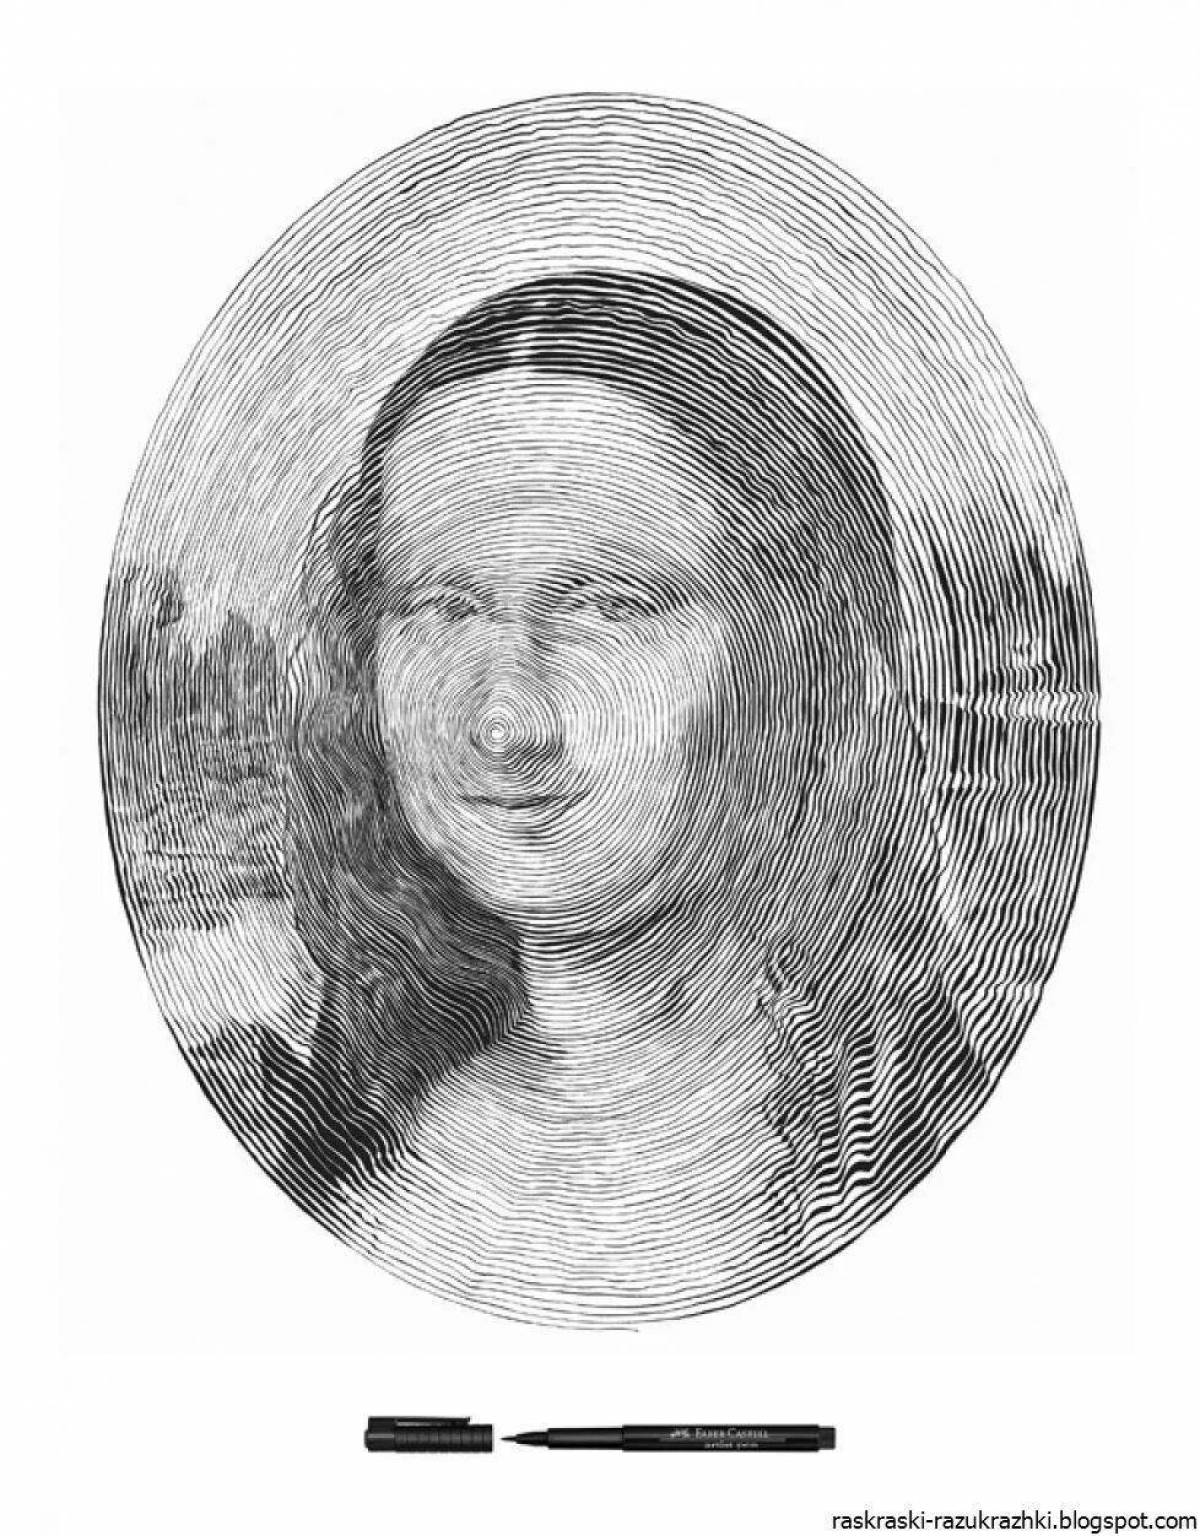 Unique circular portrait from a photograph